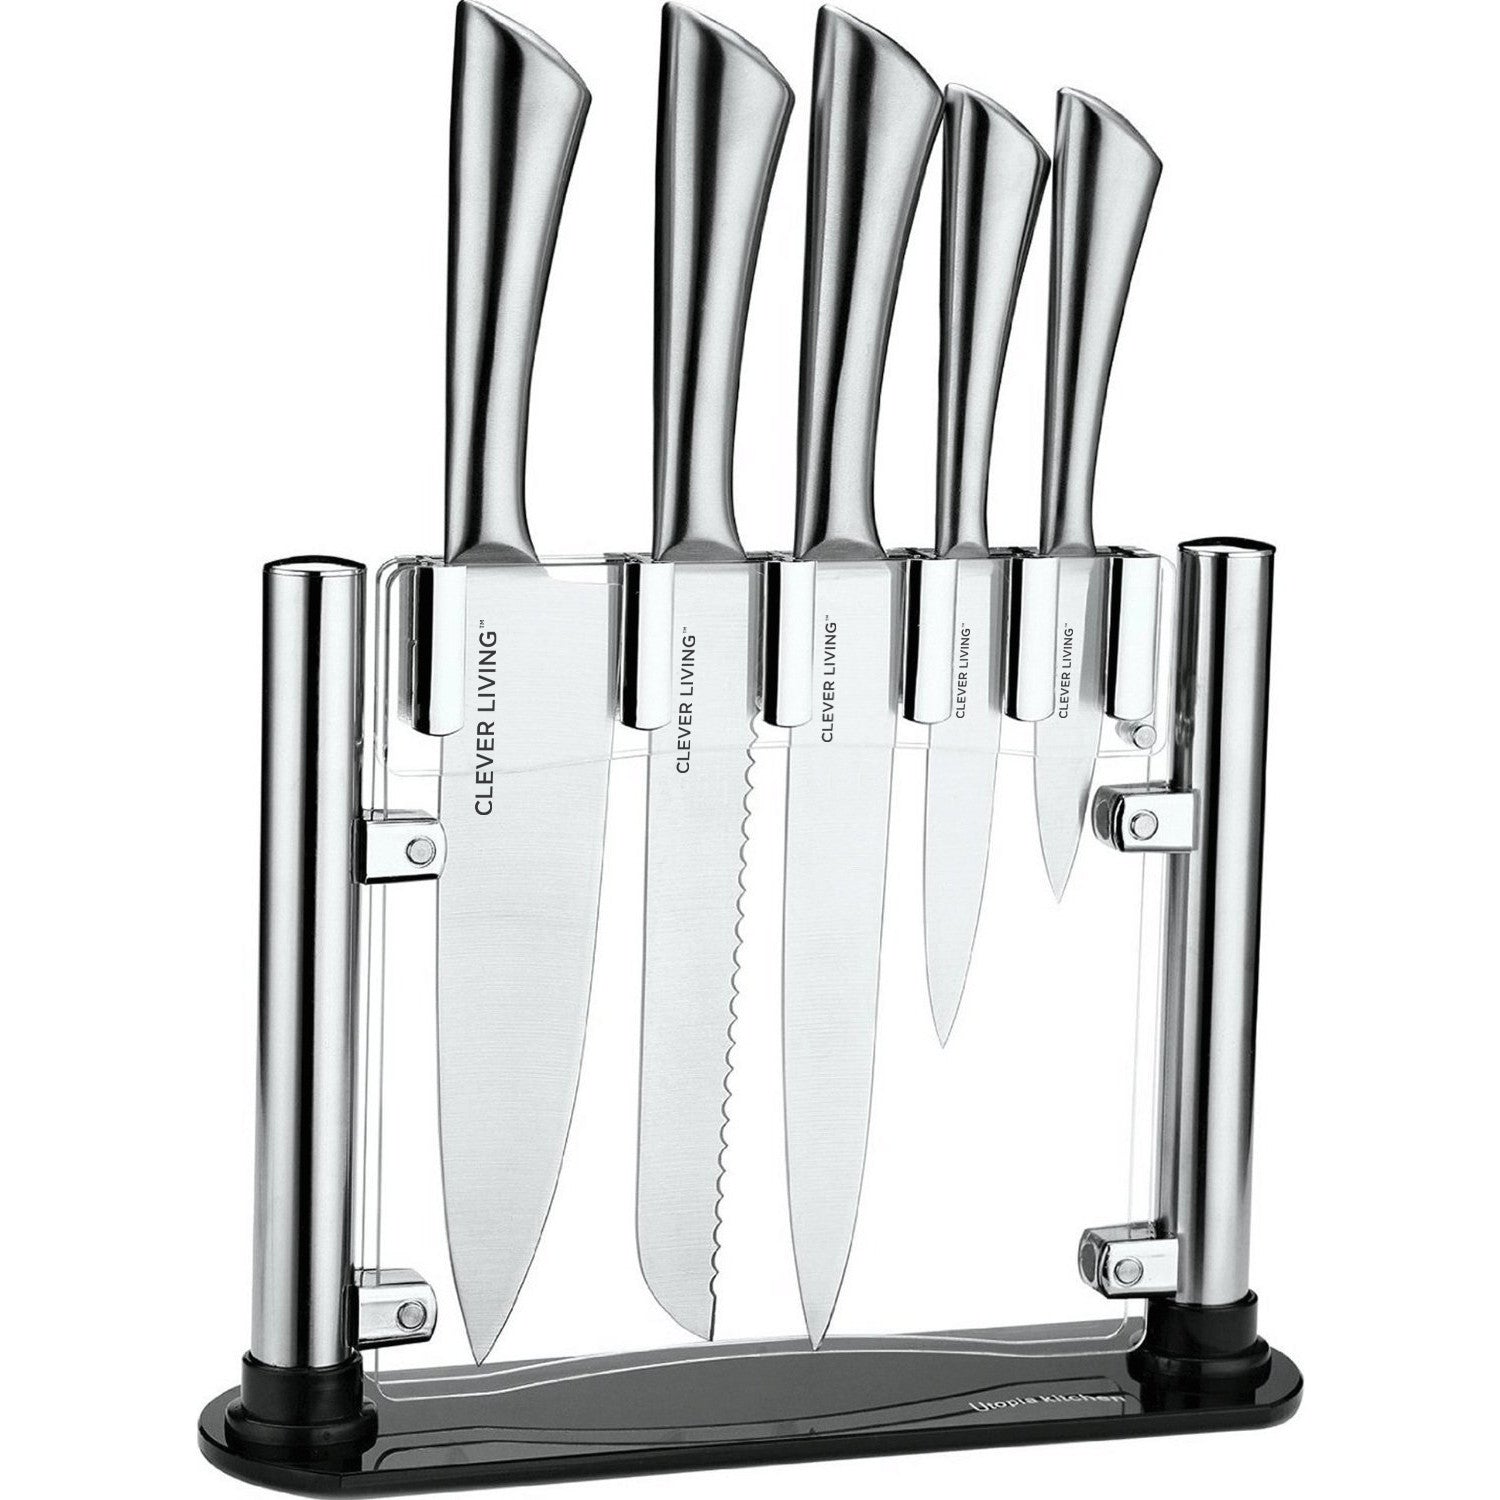 Рейтинг наборов для кухни. Ножи Kitchen Knife Stainless Steel. Стайнлесс стил нож. Нож кухонный “Stainless Steel” 2386. Premium Stainless Steel нож.